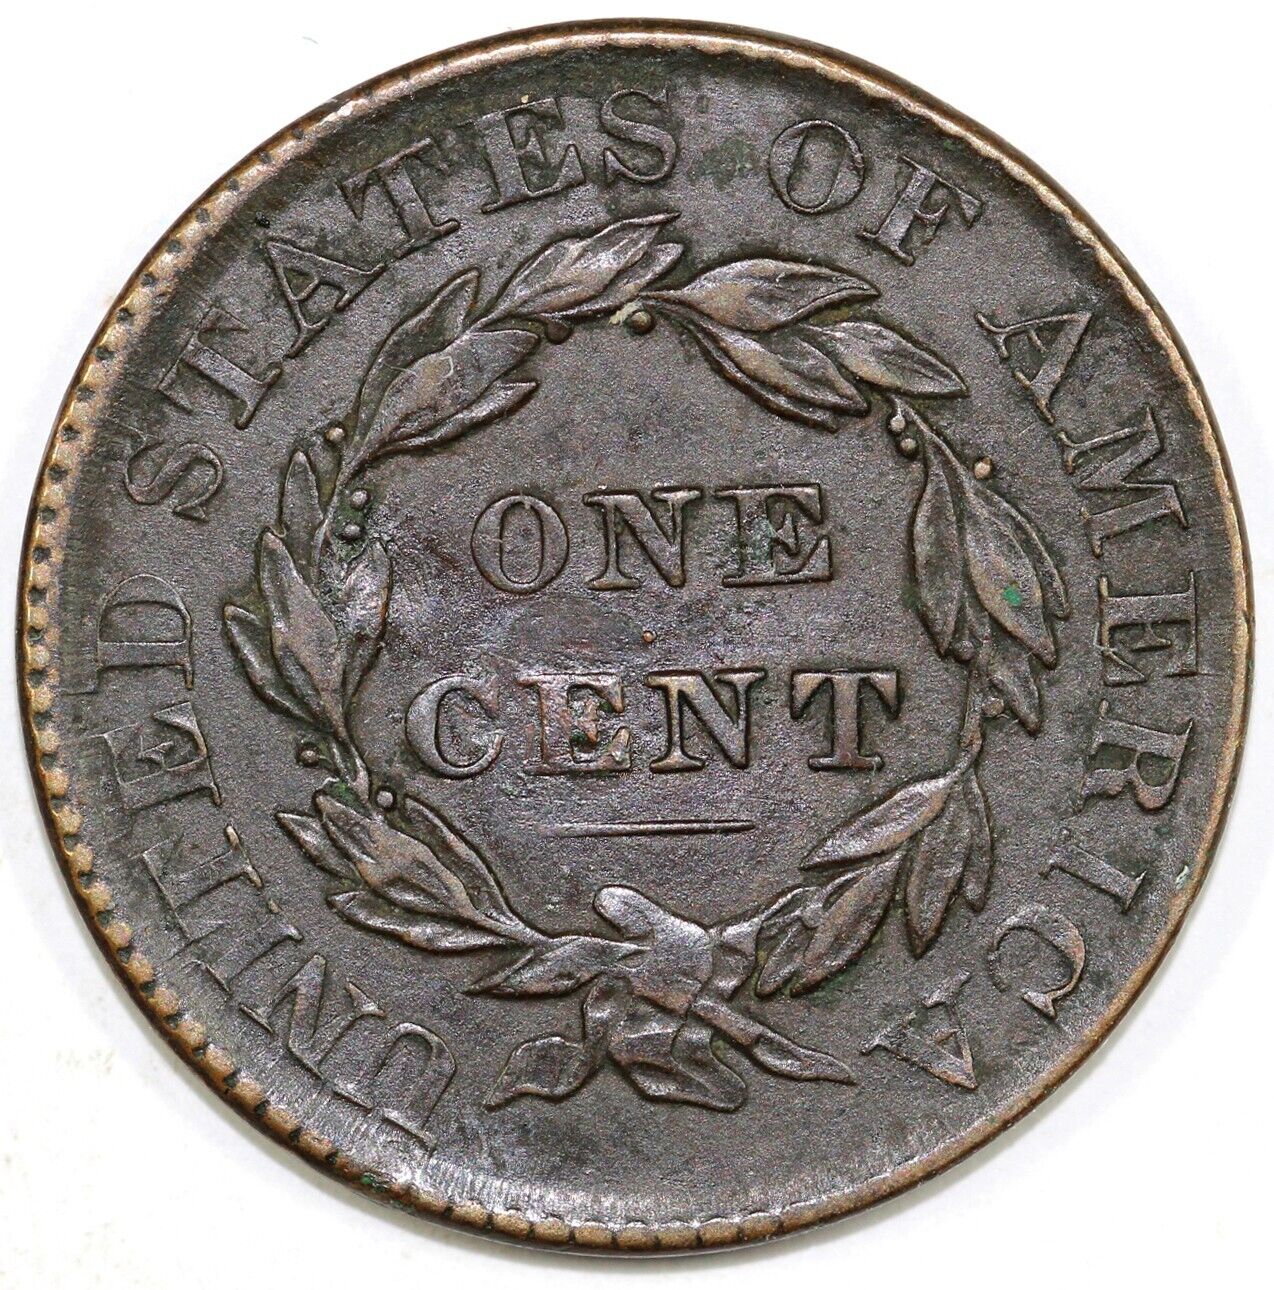 1830 1c N-7 Coronet or Matron Head Large Cent